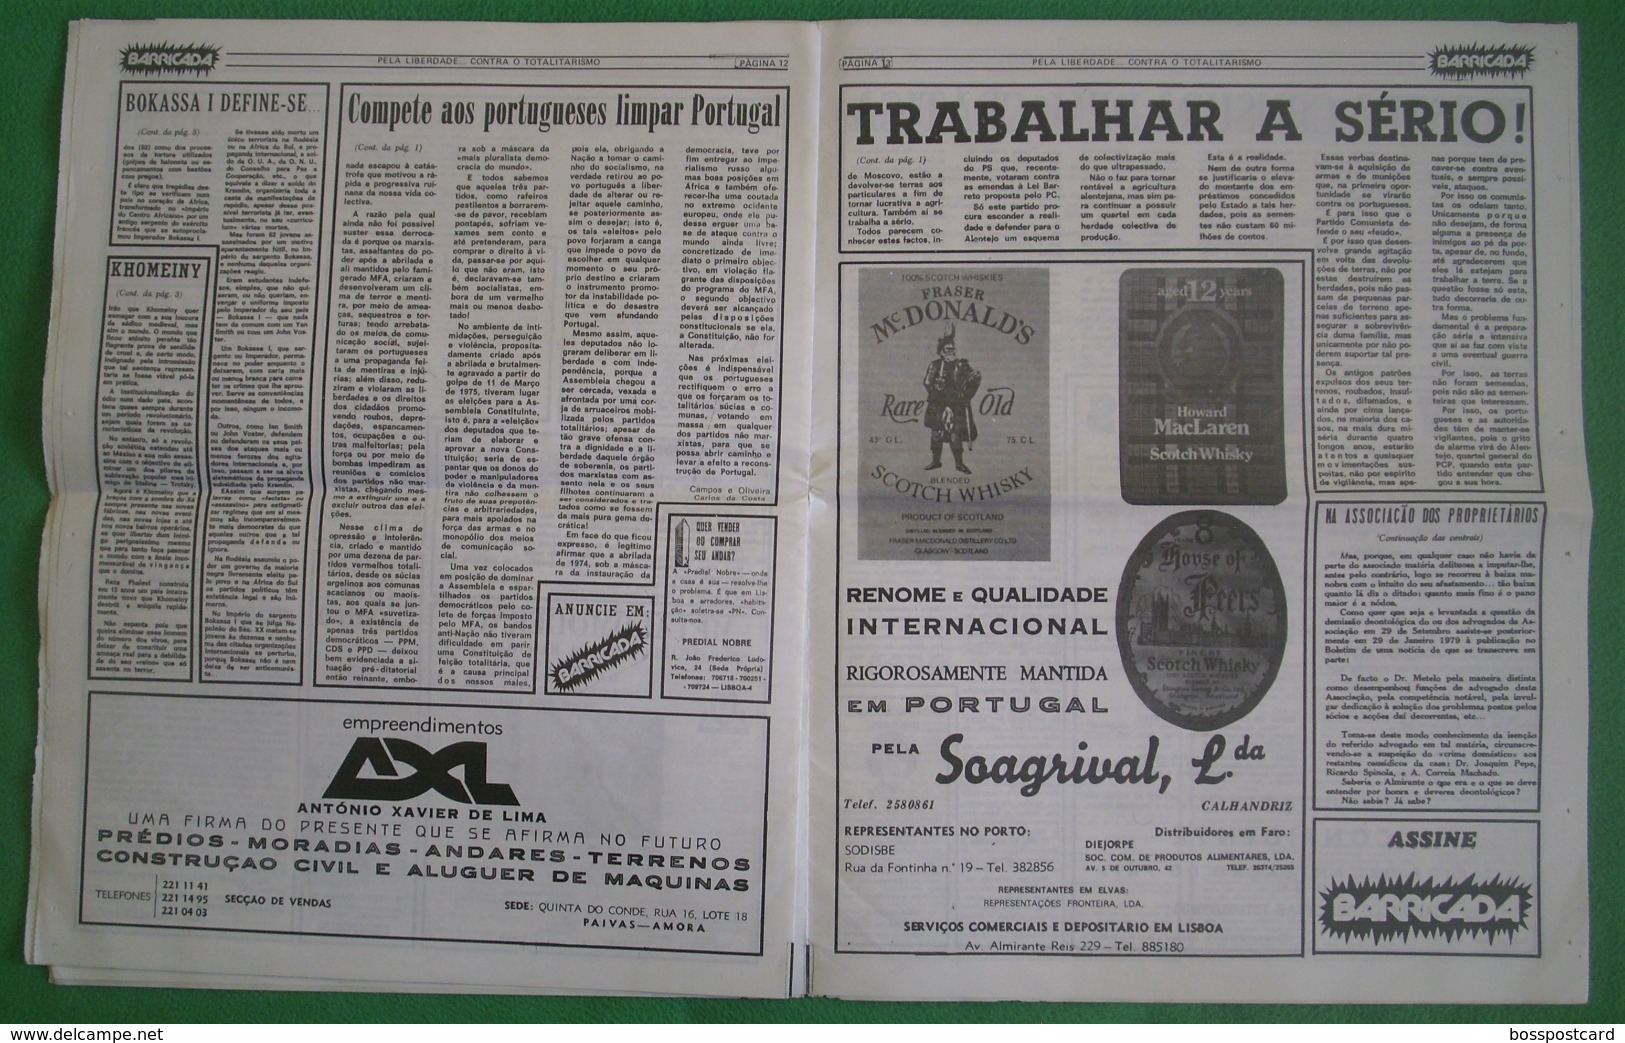 Lisboa - Portugal - Jornal Barricada Nº 185 de Maio de 1979 - República Portuguesa  Imprensa - 25 de Abril - PREC